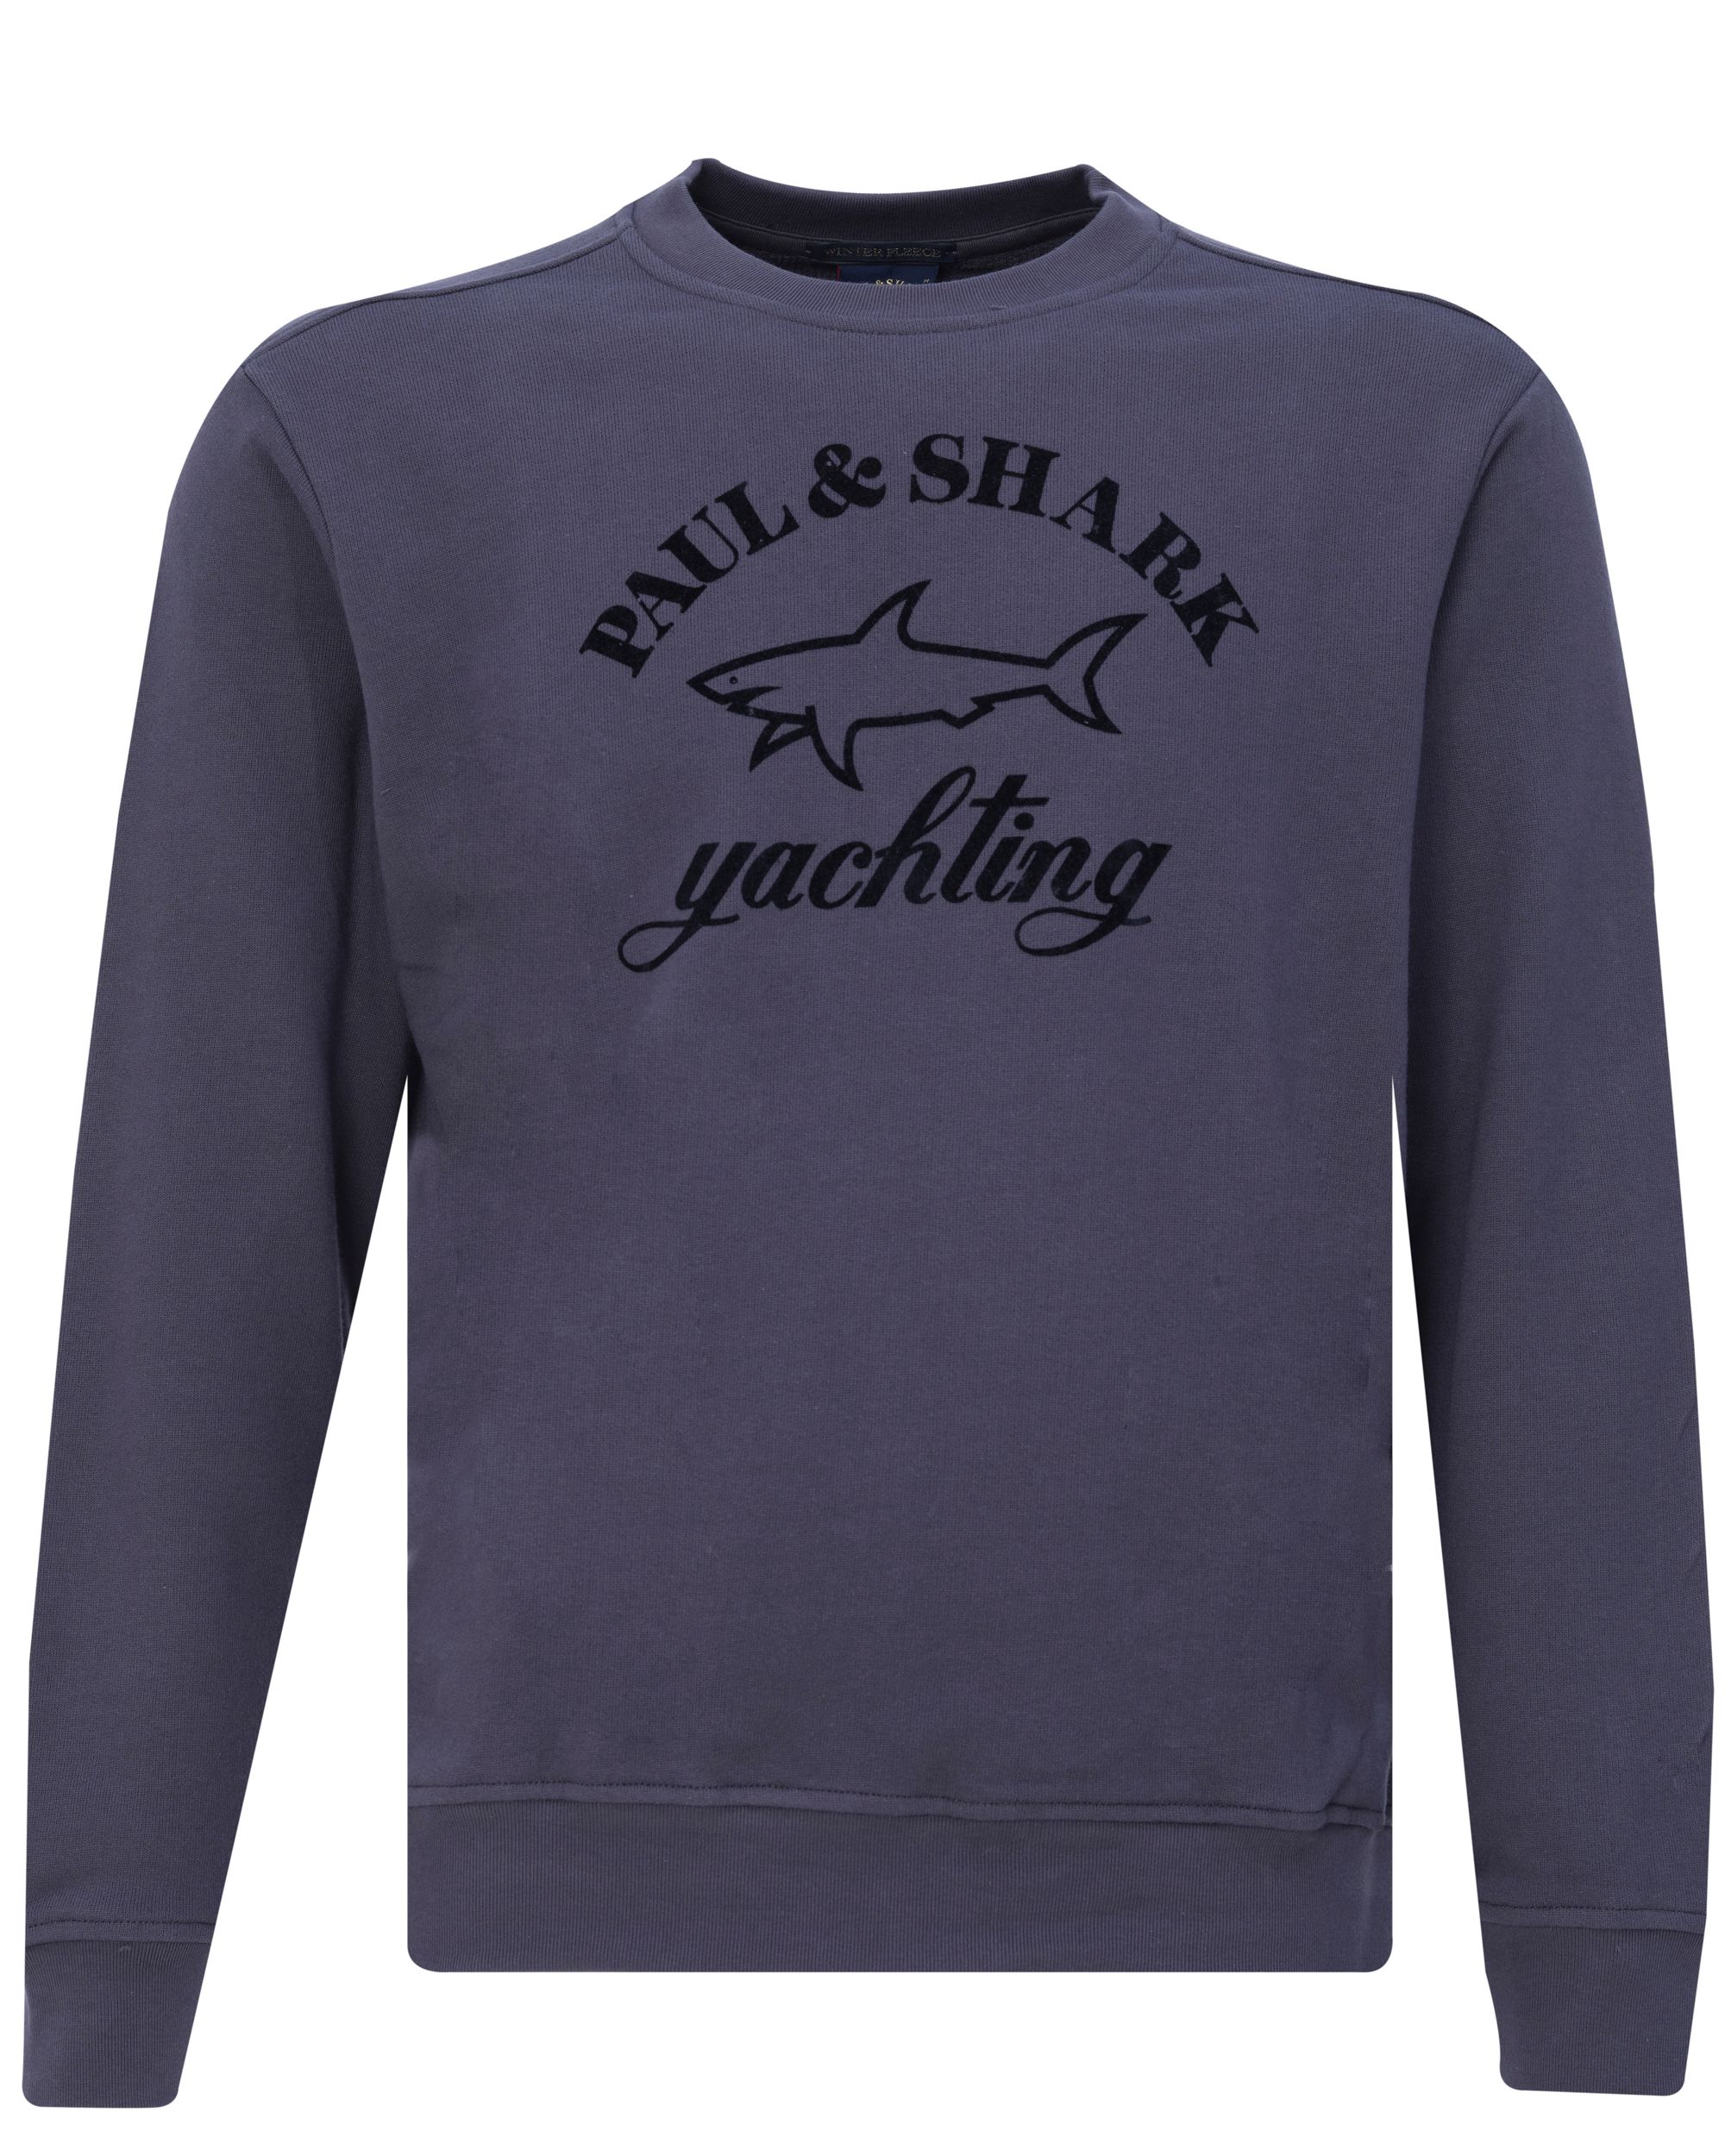 Paul & Shark Sweater Grijs 080389-001-L